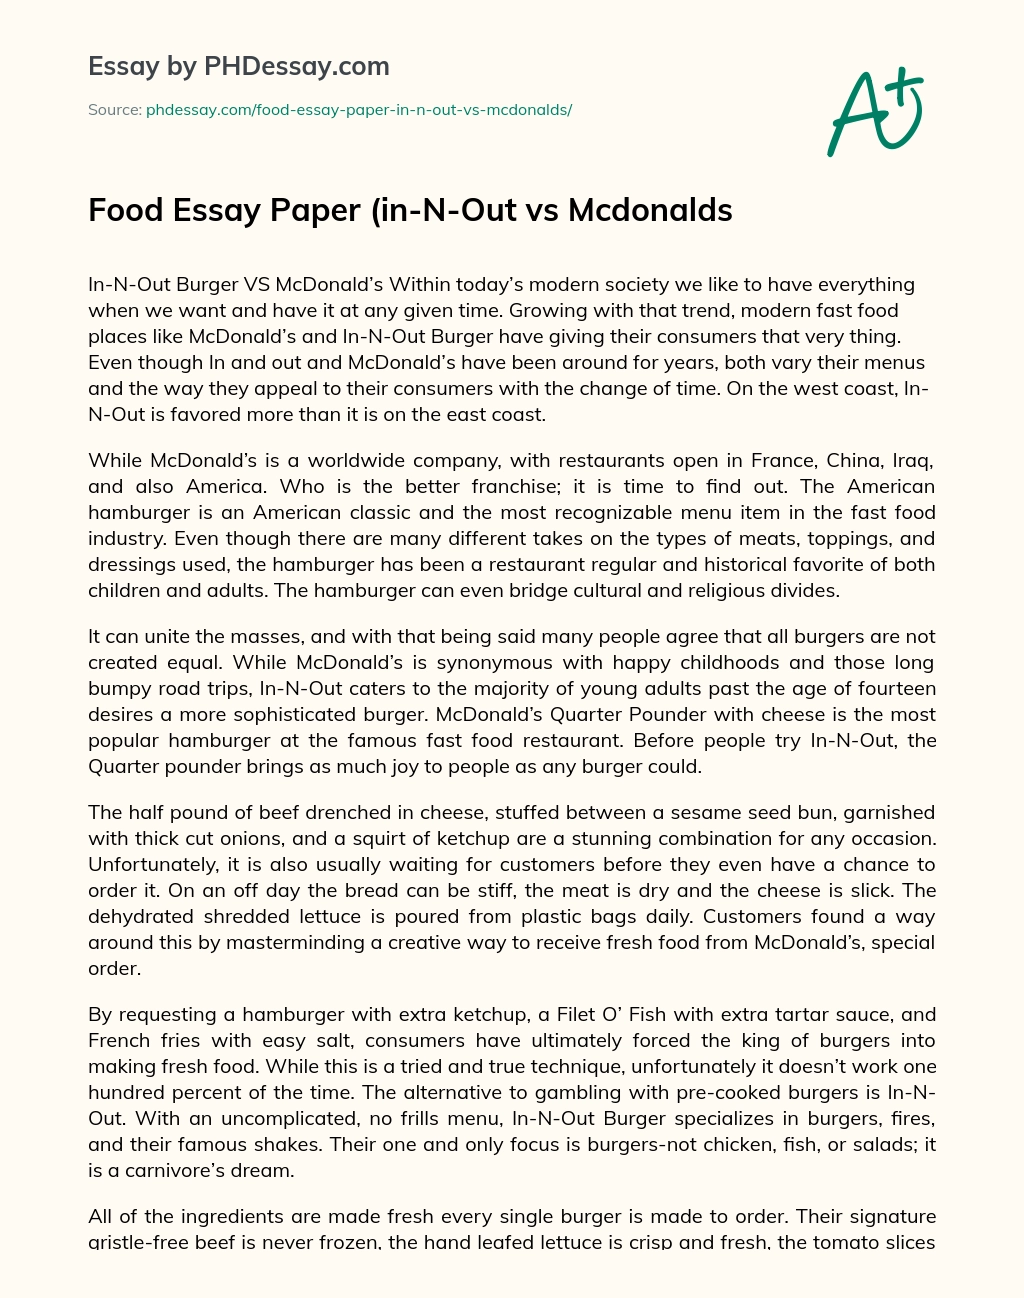 Food Essay Paper (in-N-Out vs Mcdonalds essay